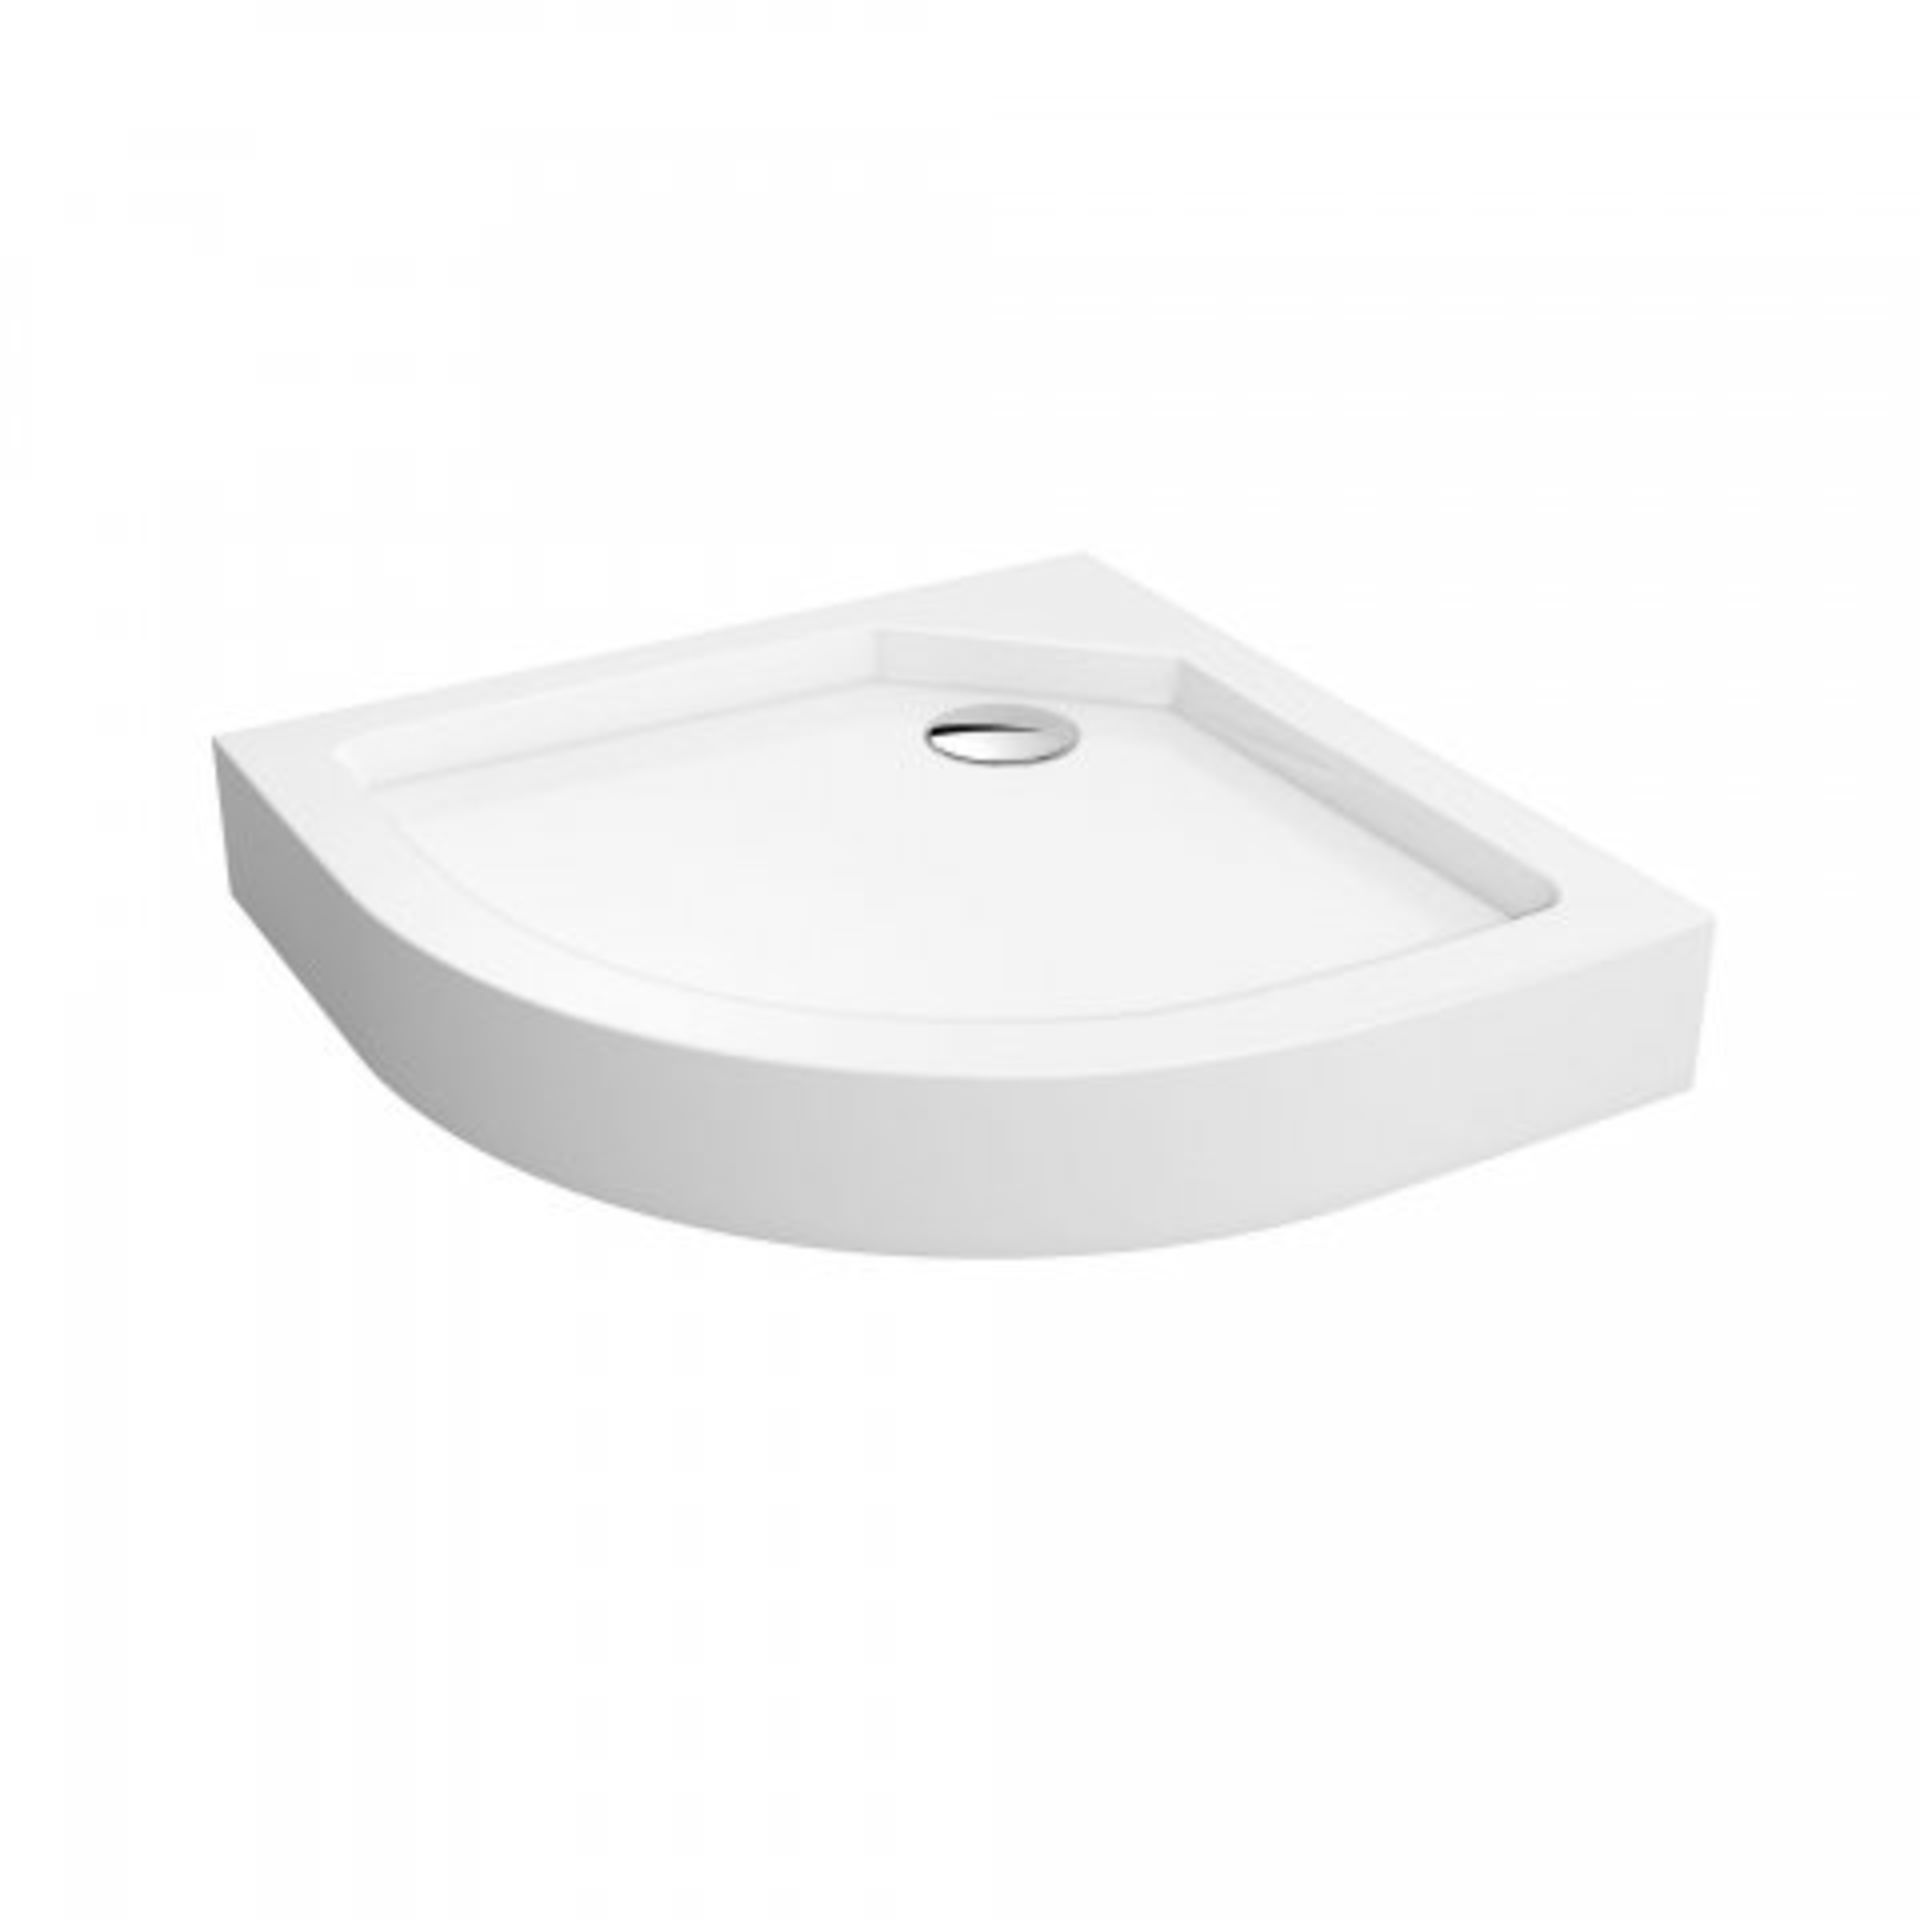 (M32) 800x800mm Quadrant Easy Plumb Shower Tray. RRP £114.99. Our brilliant white ultra slim trays